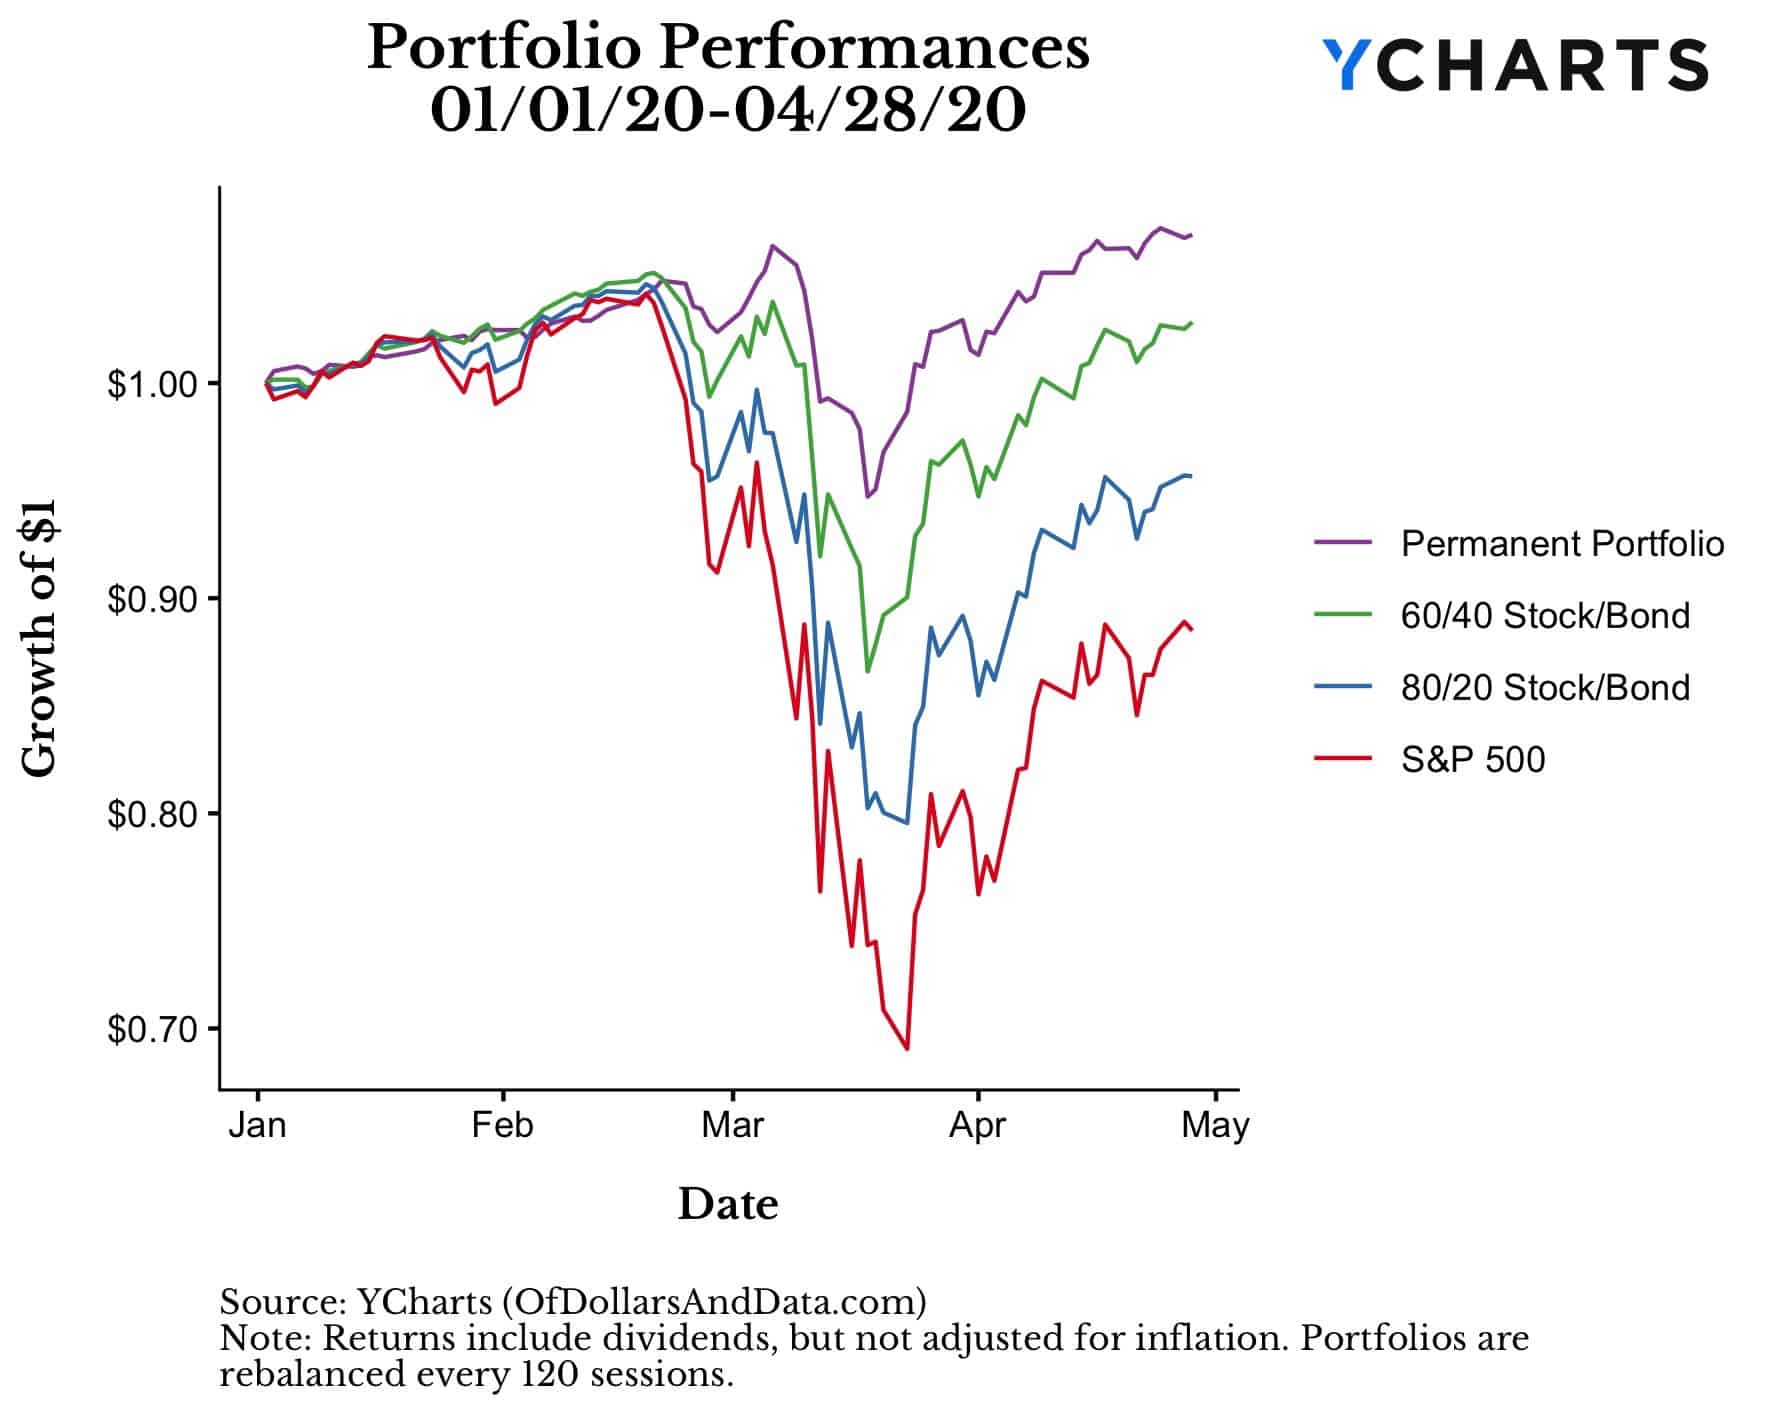 Performance of the Permanent portfolio, the 60/40 portfolio, the 80/20 portfolio, and the S&P 500 from January 1, 2020 to the April 28, 2020